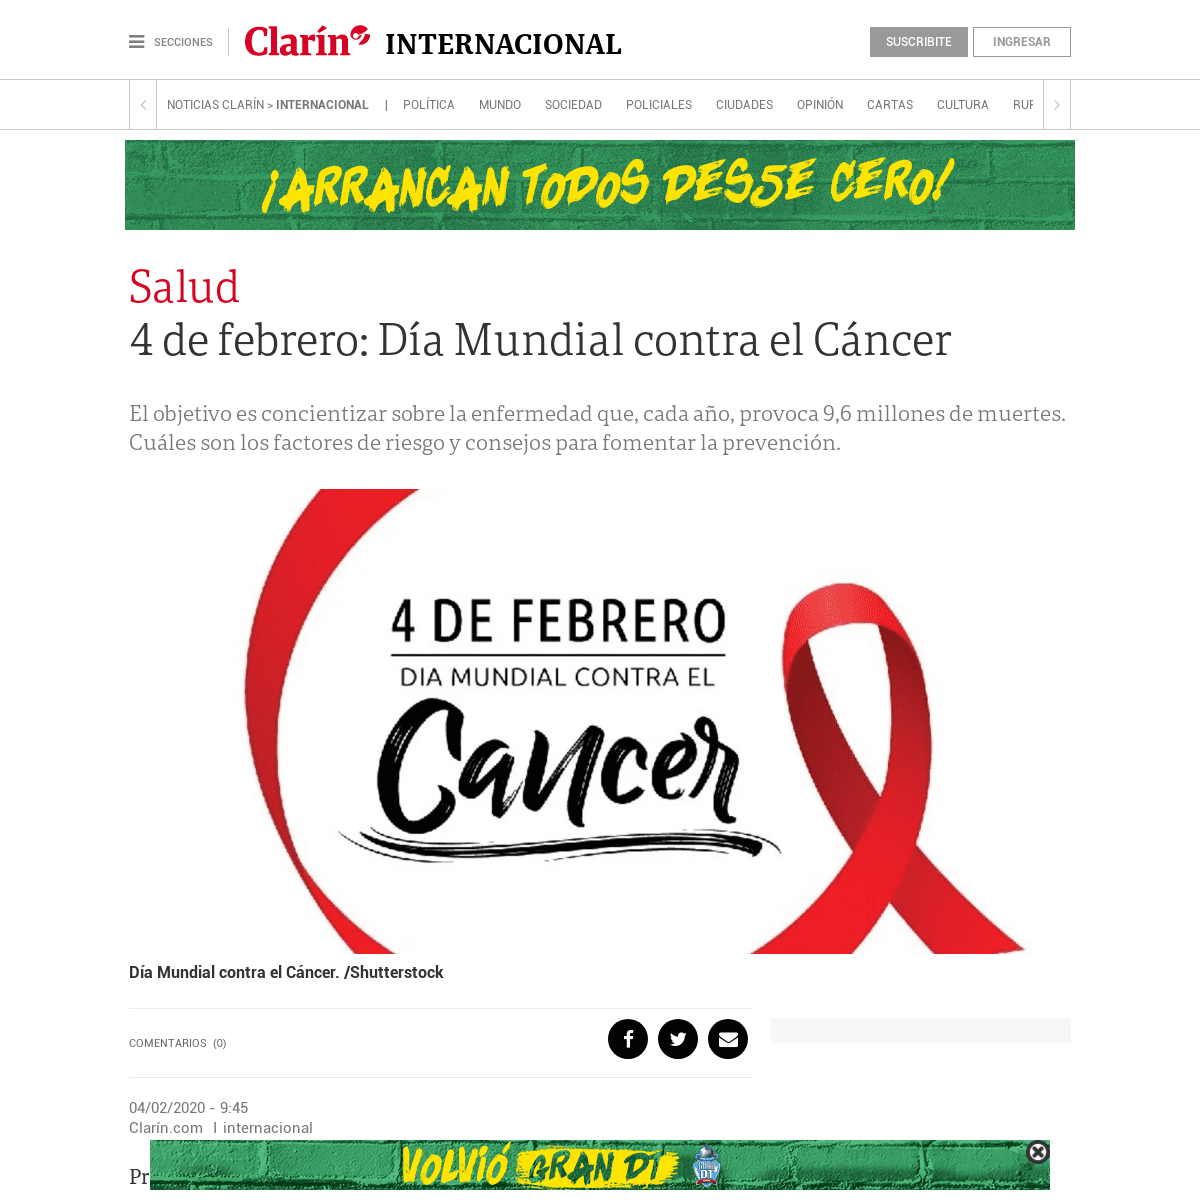 A complete backup of www.clarin.com/internacional/4-febrero-dia-mundial-cancer_0_swXo5vgl.html